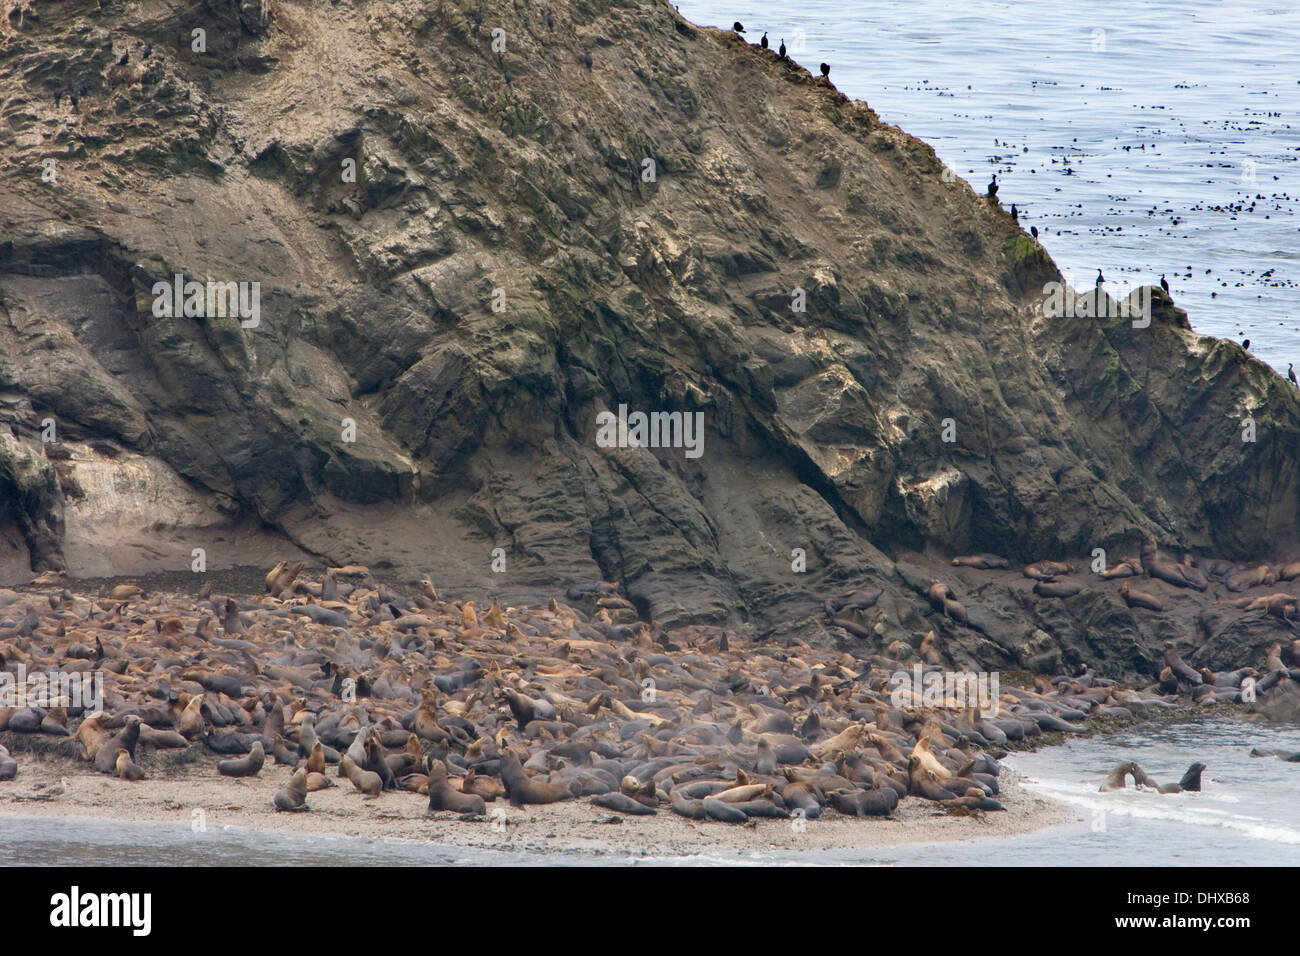 Sea lions lounge on Shell Rock along the Simpson Reef near Cape Arago, Oregon coast, Oregon. Stock Photo